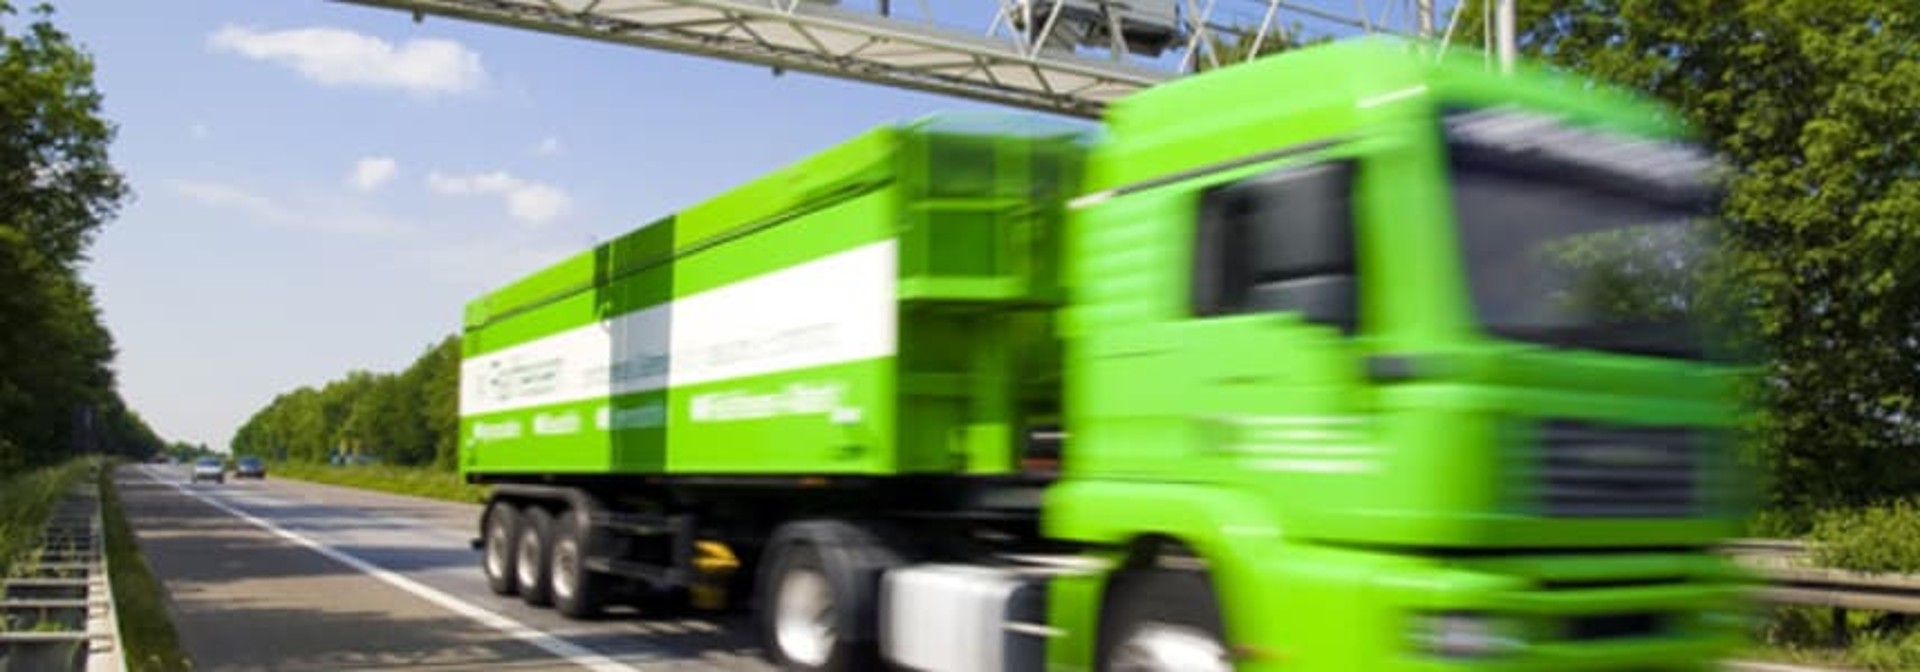 DKV toll green truck